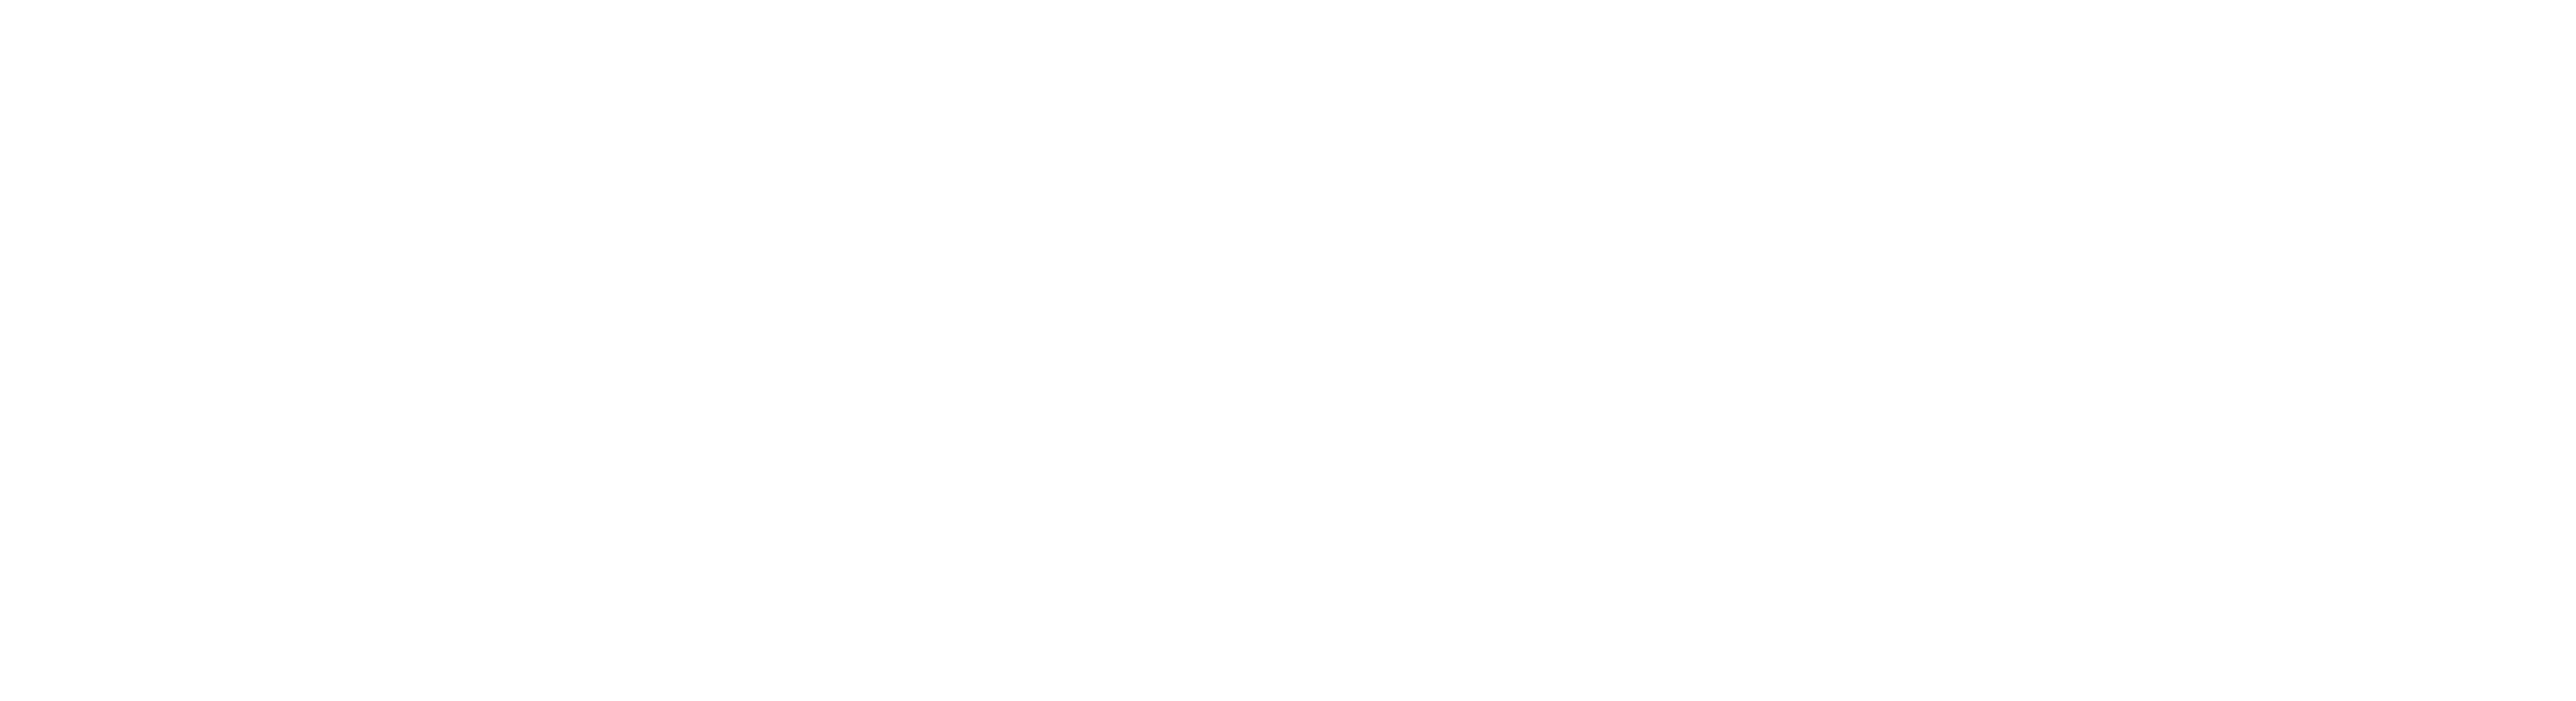 AHK Greater China Xceleration Days 2024